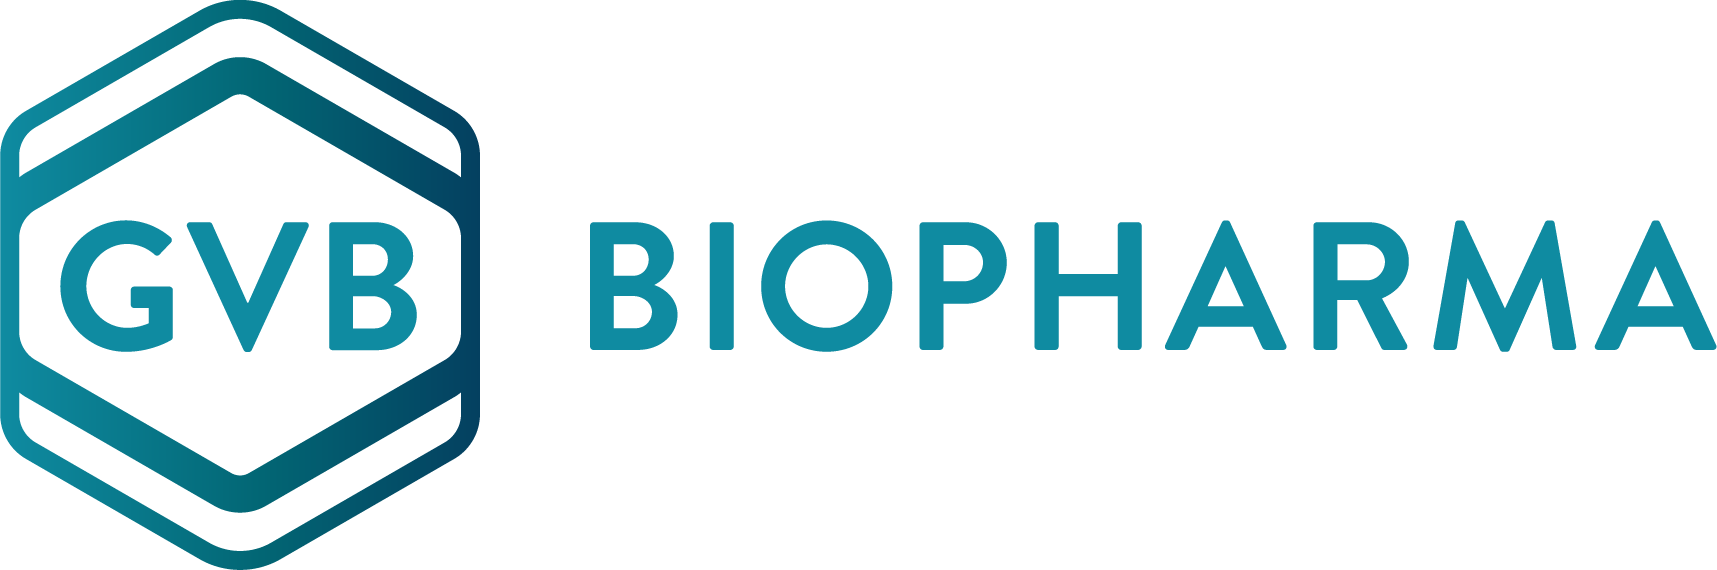 Gvb Biopharma